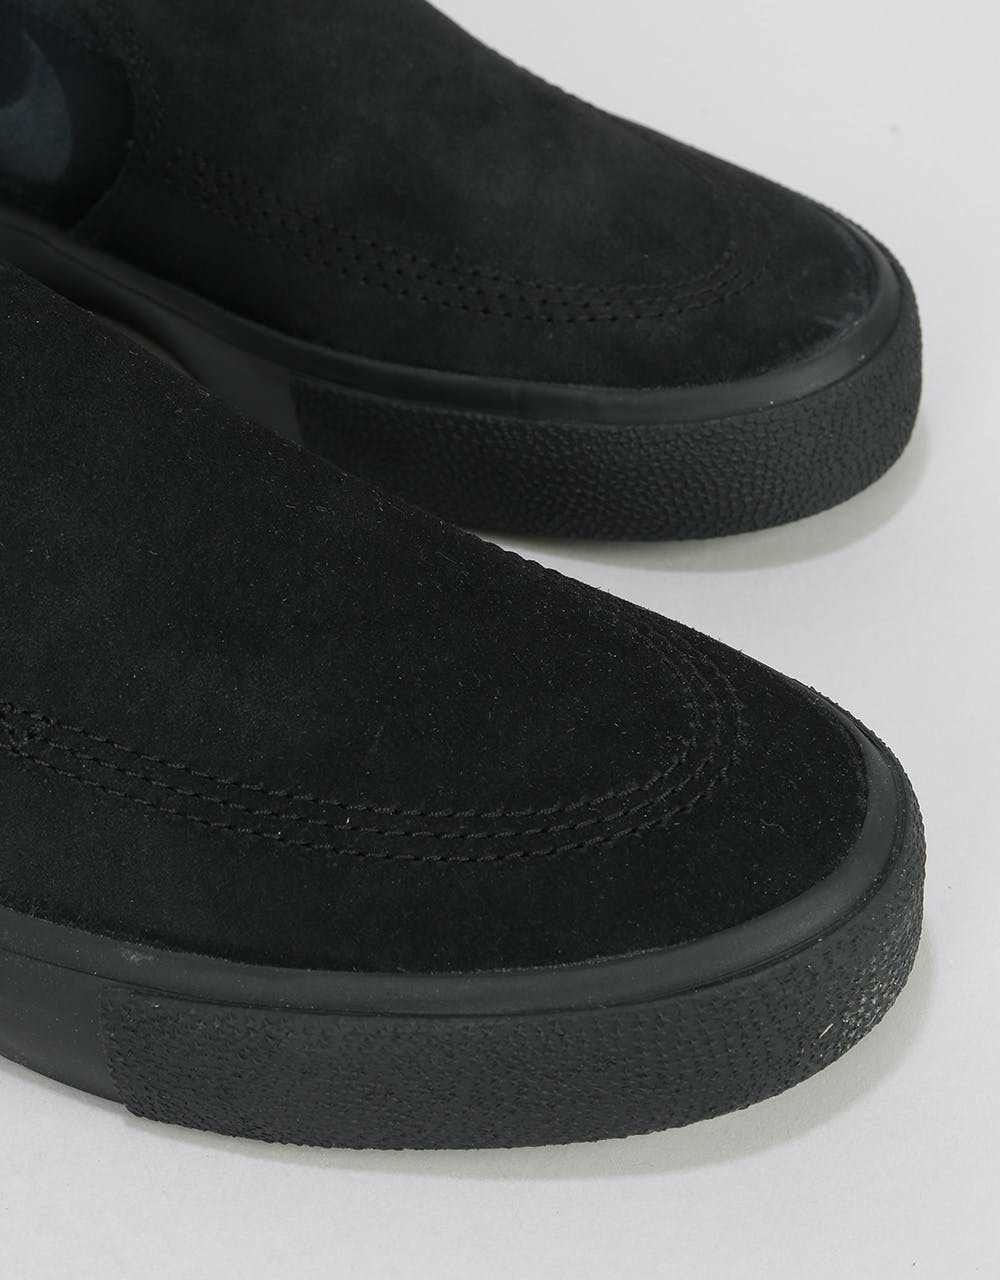 Nike SB Zoom Janoski Slip RM Skate Shoes - Black/Black-Black-Black